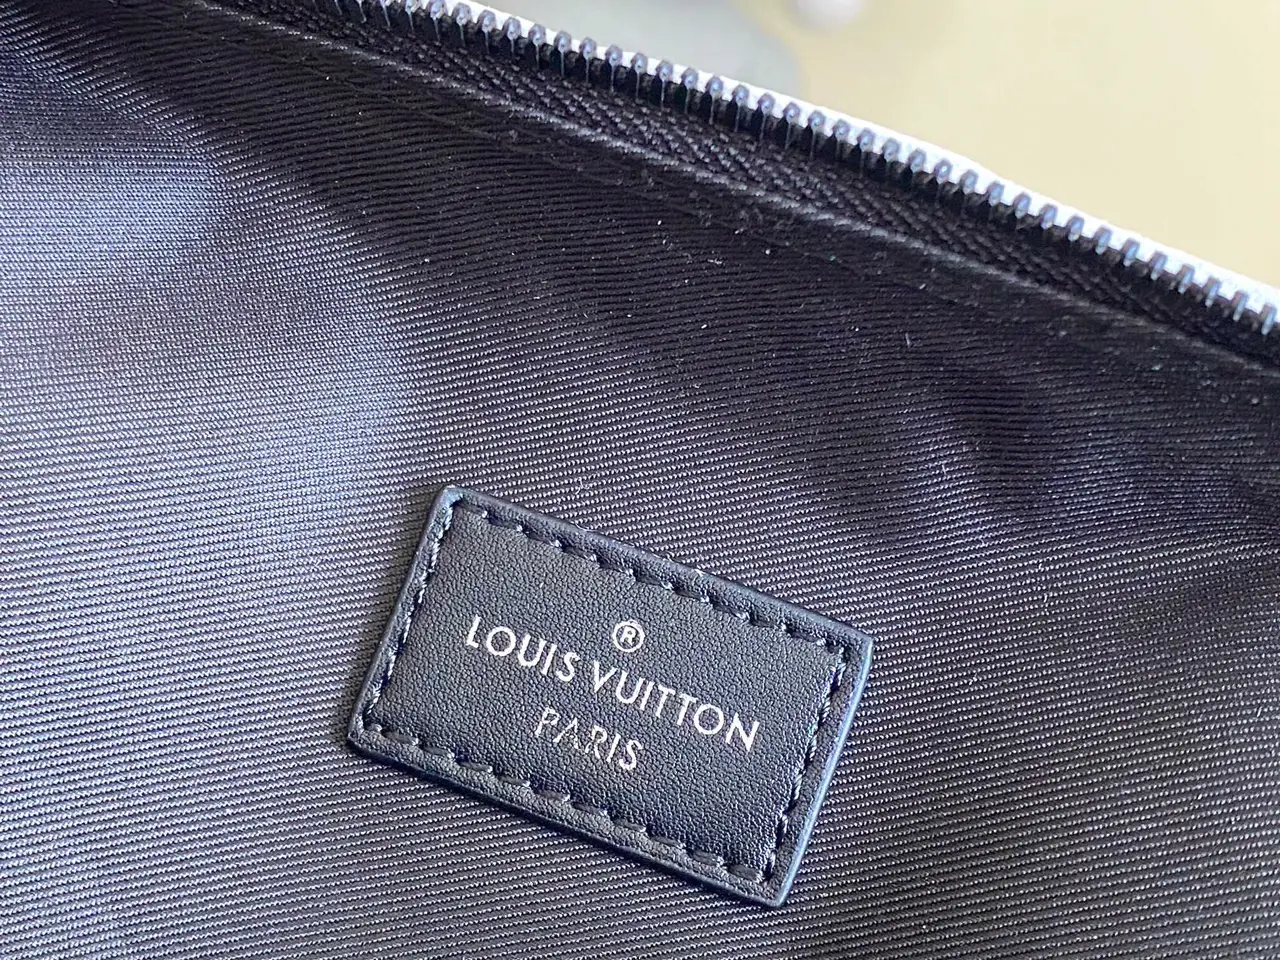 Louis Vuitton M45935 Handle Soft Trunk handbag for sale:yourbagsus